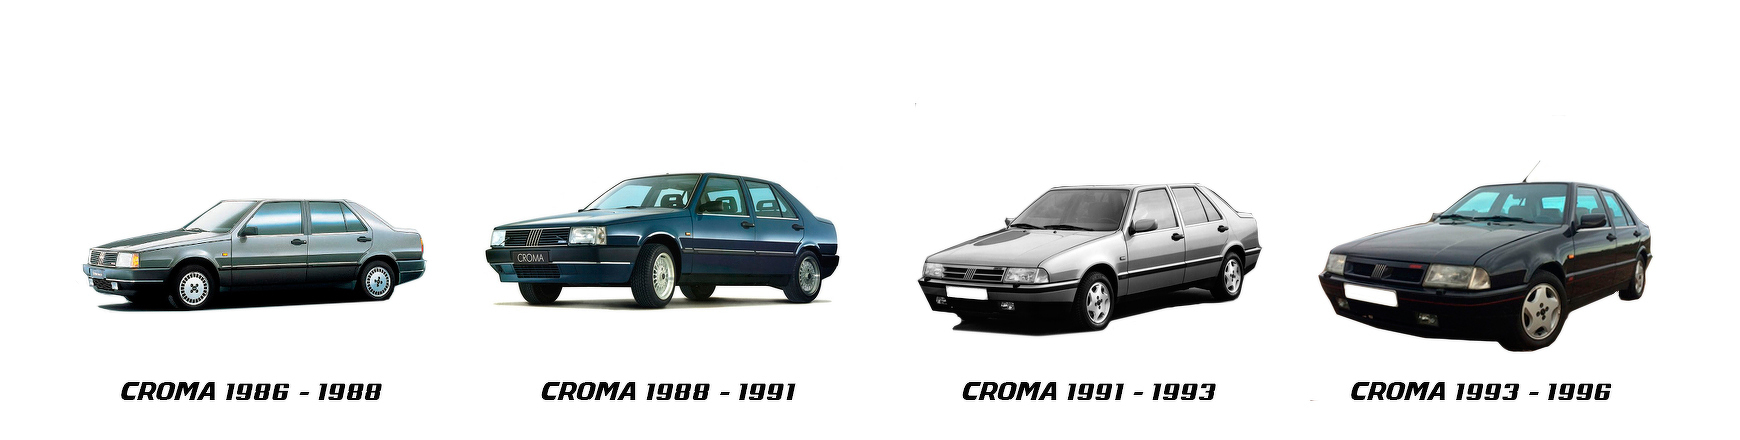 Fiat Croma 1985 1986 1987 1988 1989 1990 1991 1992 1993 1994 1995 1996